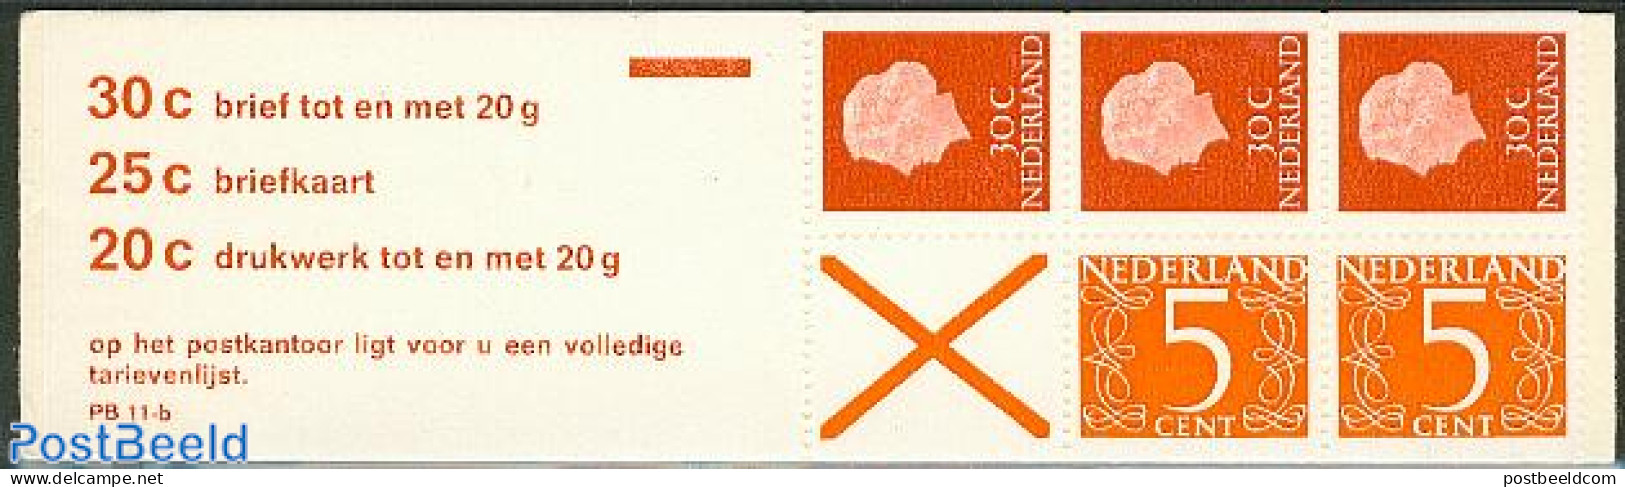 Netherlands 1971 2x5, 3x30c Booklet, Text: 30c Brief Tot En Met 20, Mint NH, Stamp Booklets - Unused Stamps